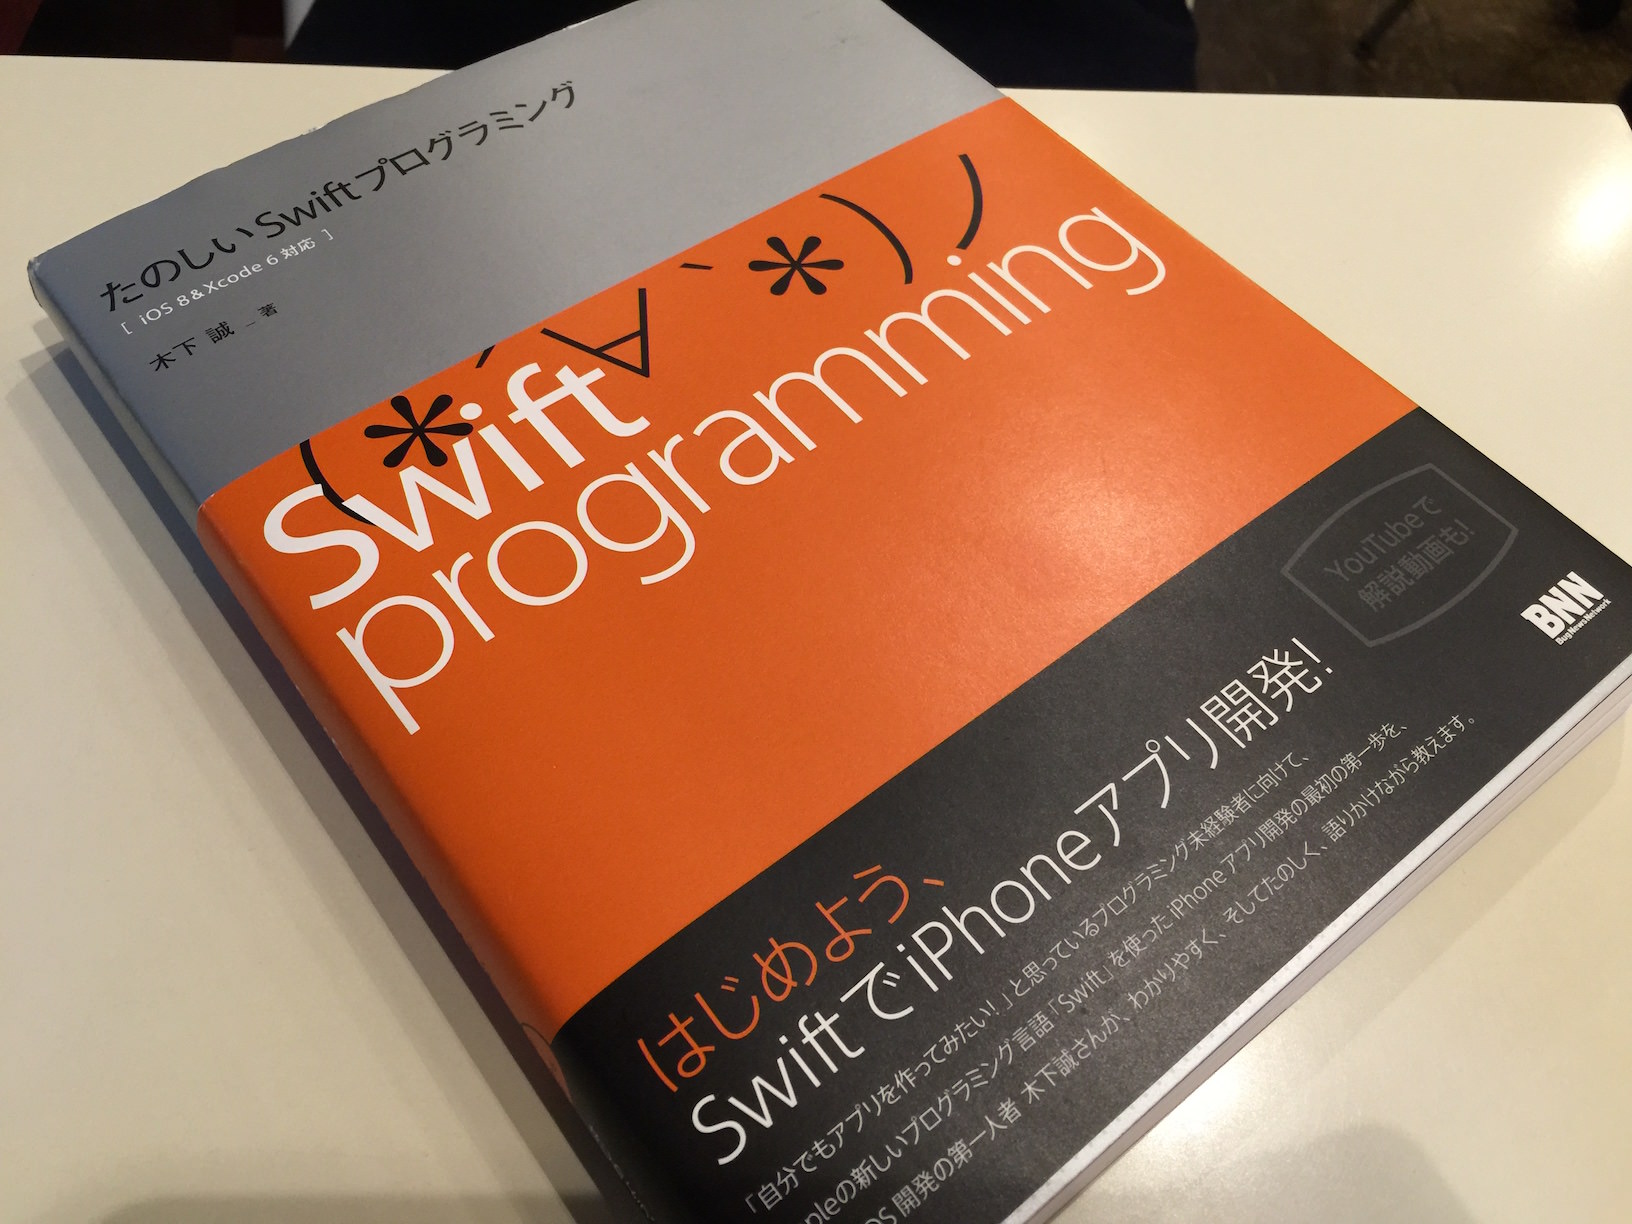 Tanoshii swift programing